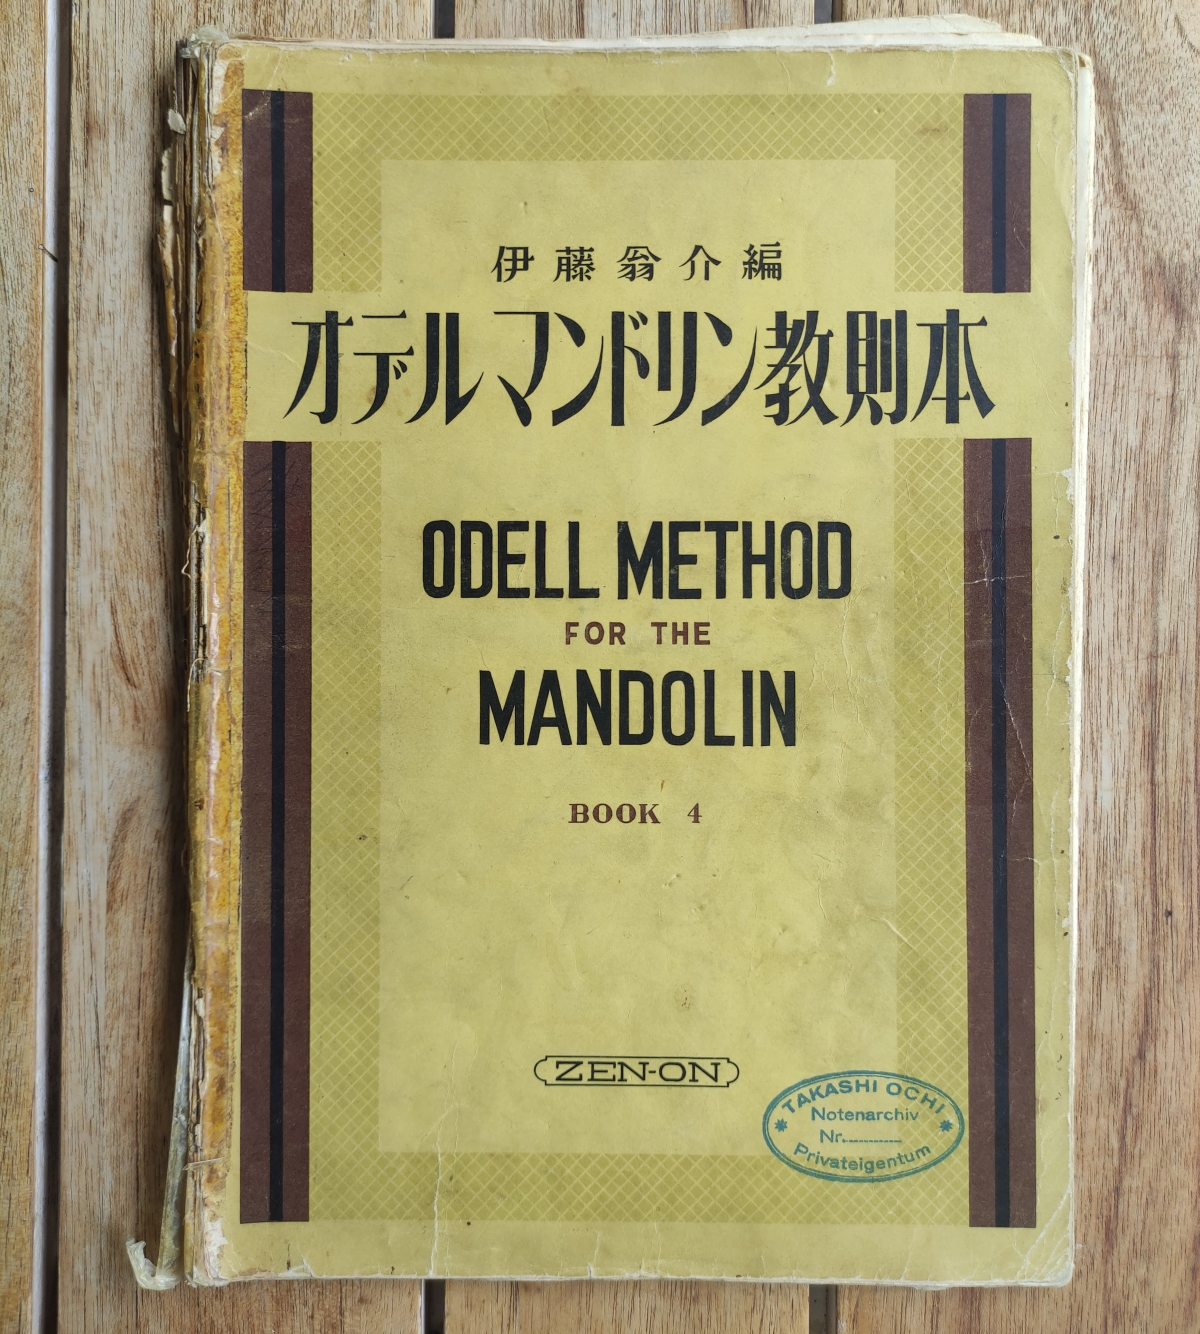 Takashi Ochi Mandoline Instrument des Jahres Mandolinenspieler des Tages